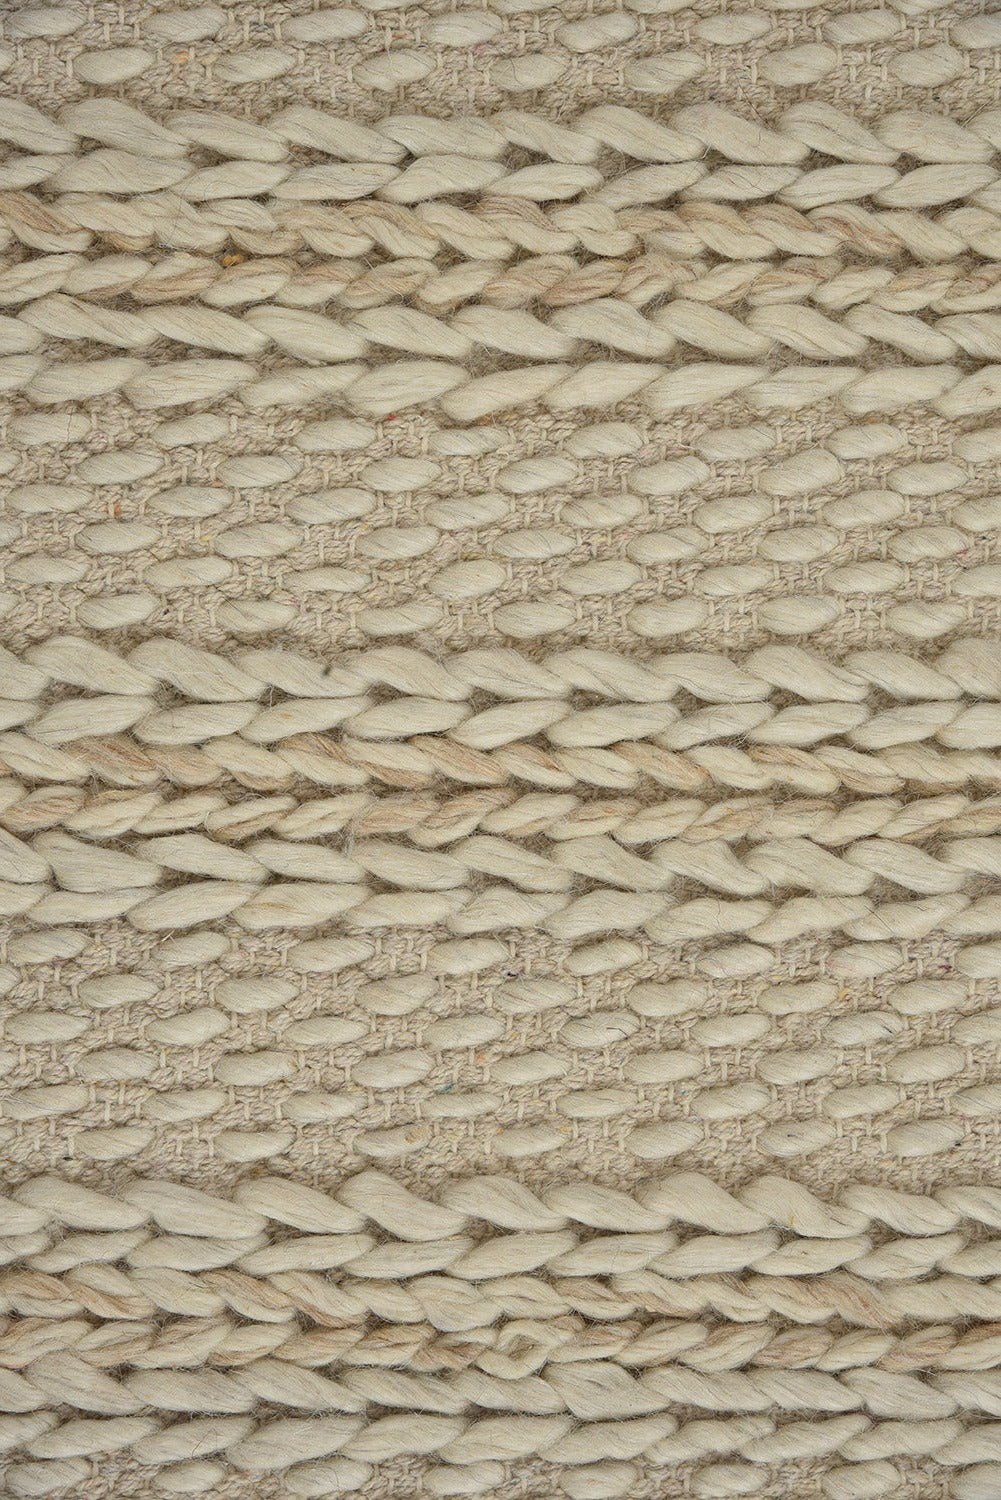 Braided wool carpet natural white from Scandi Living 